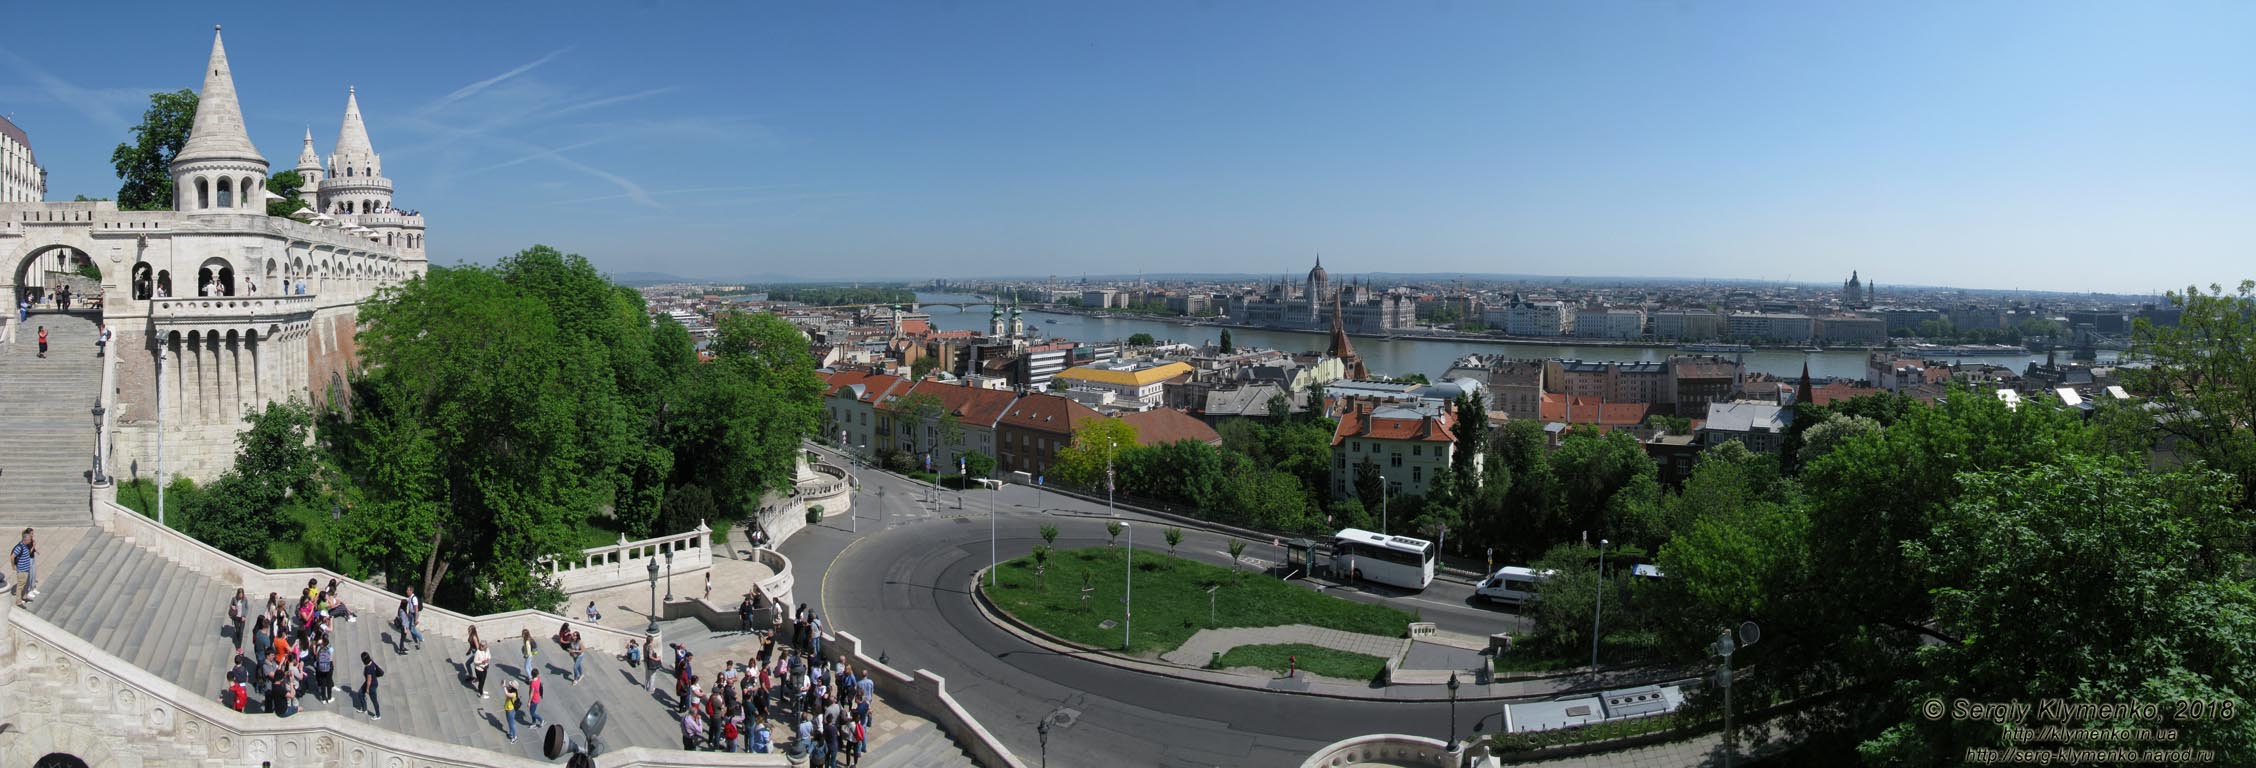 Будапешт (Budapest), Венгрия (Magyarország). Фото. Вид на Дунай и Пешт с Рыбацкого Бастиона (Halaszbastya). Панорама ~150°.